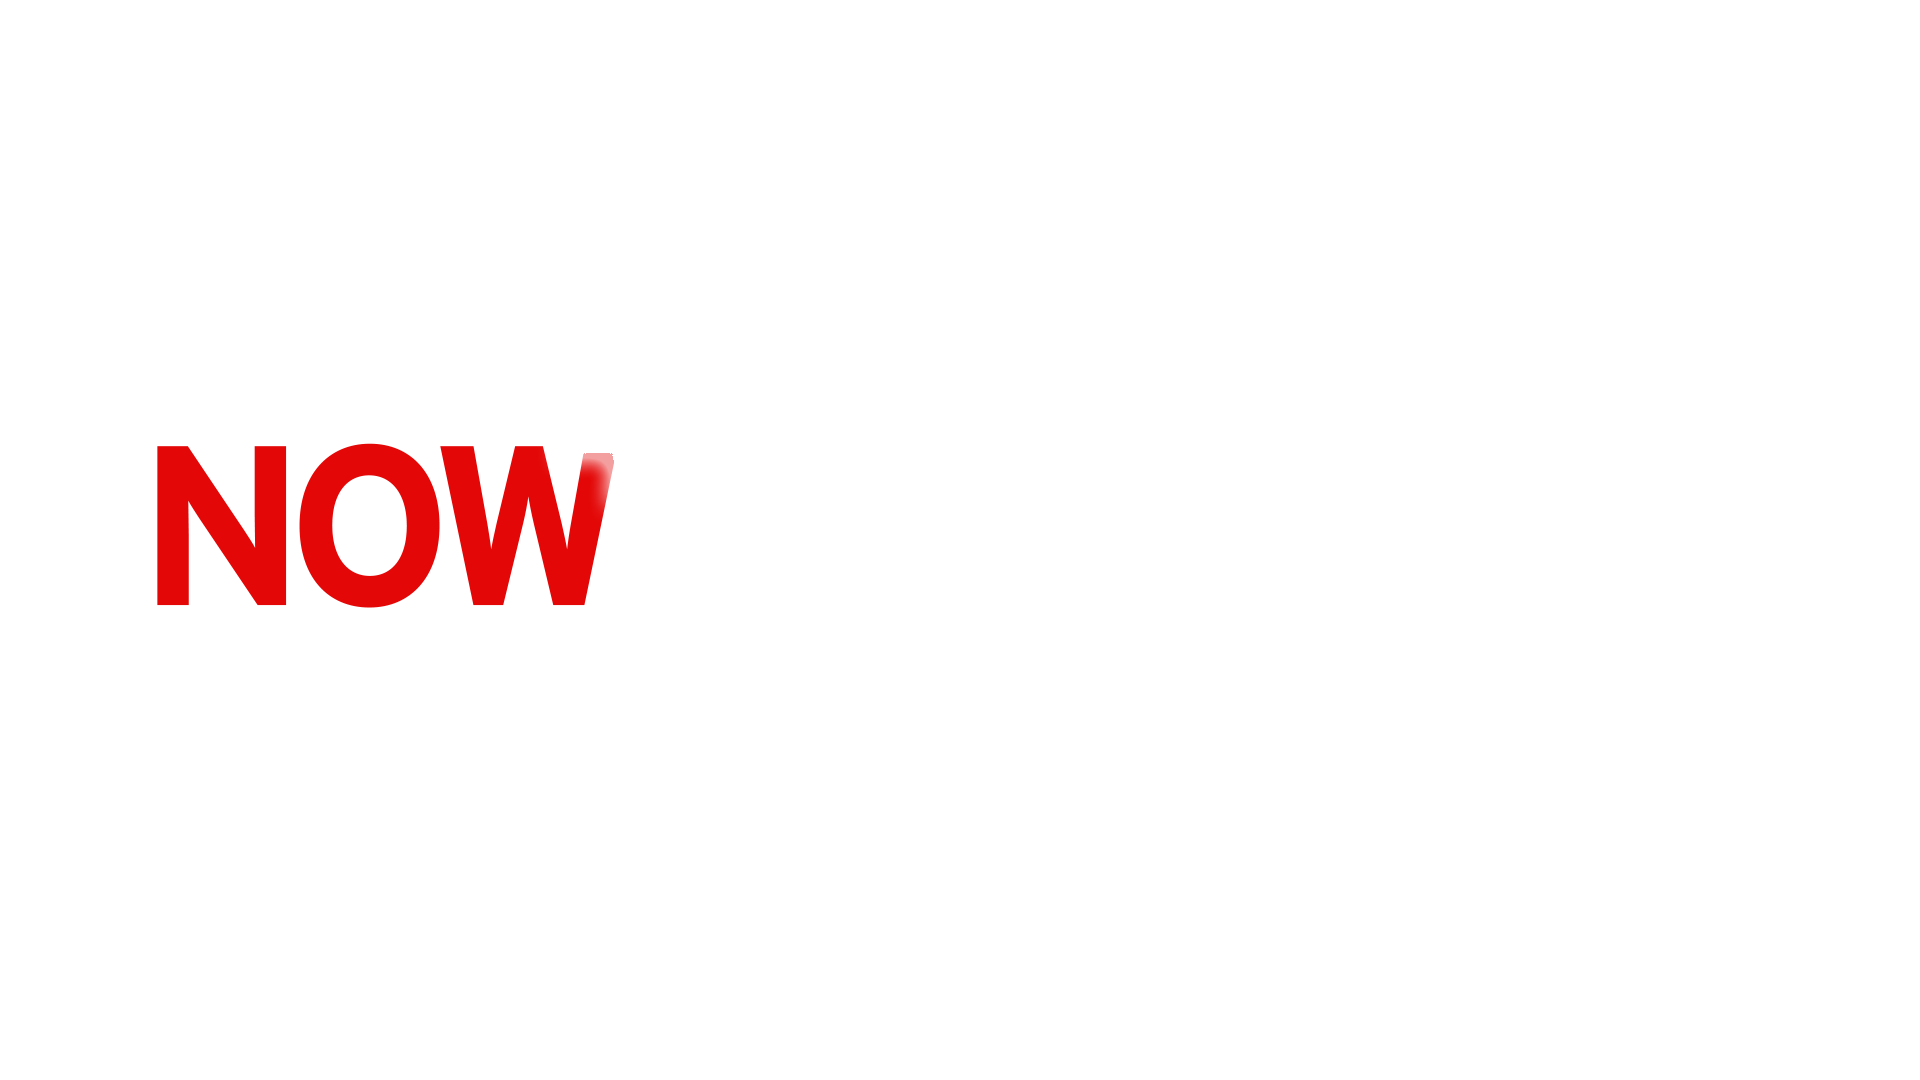 Now Equipment Logo